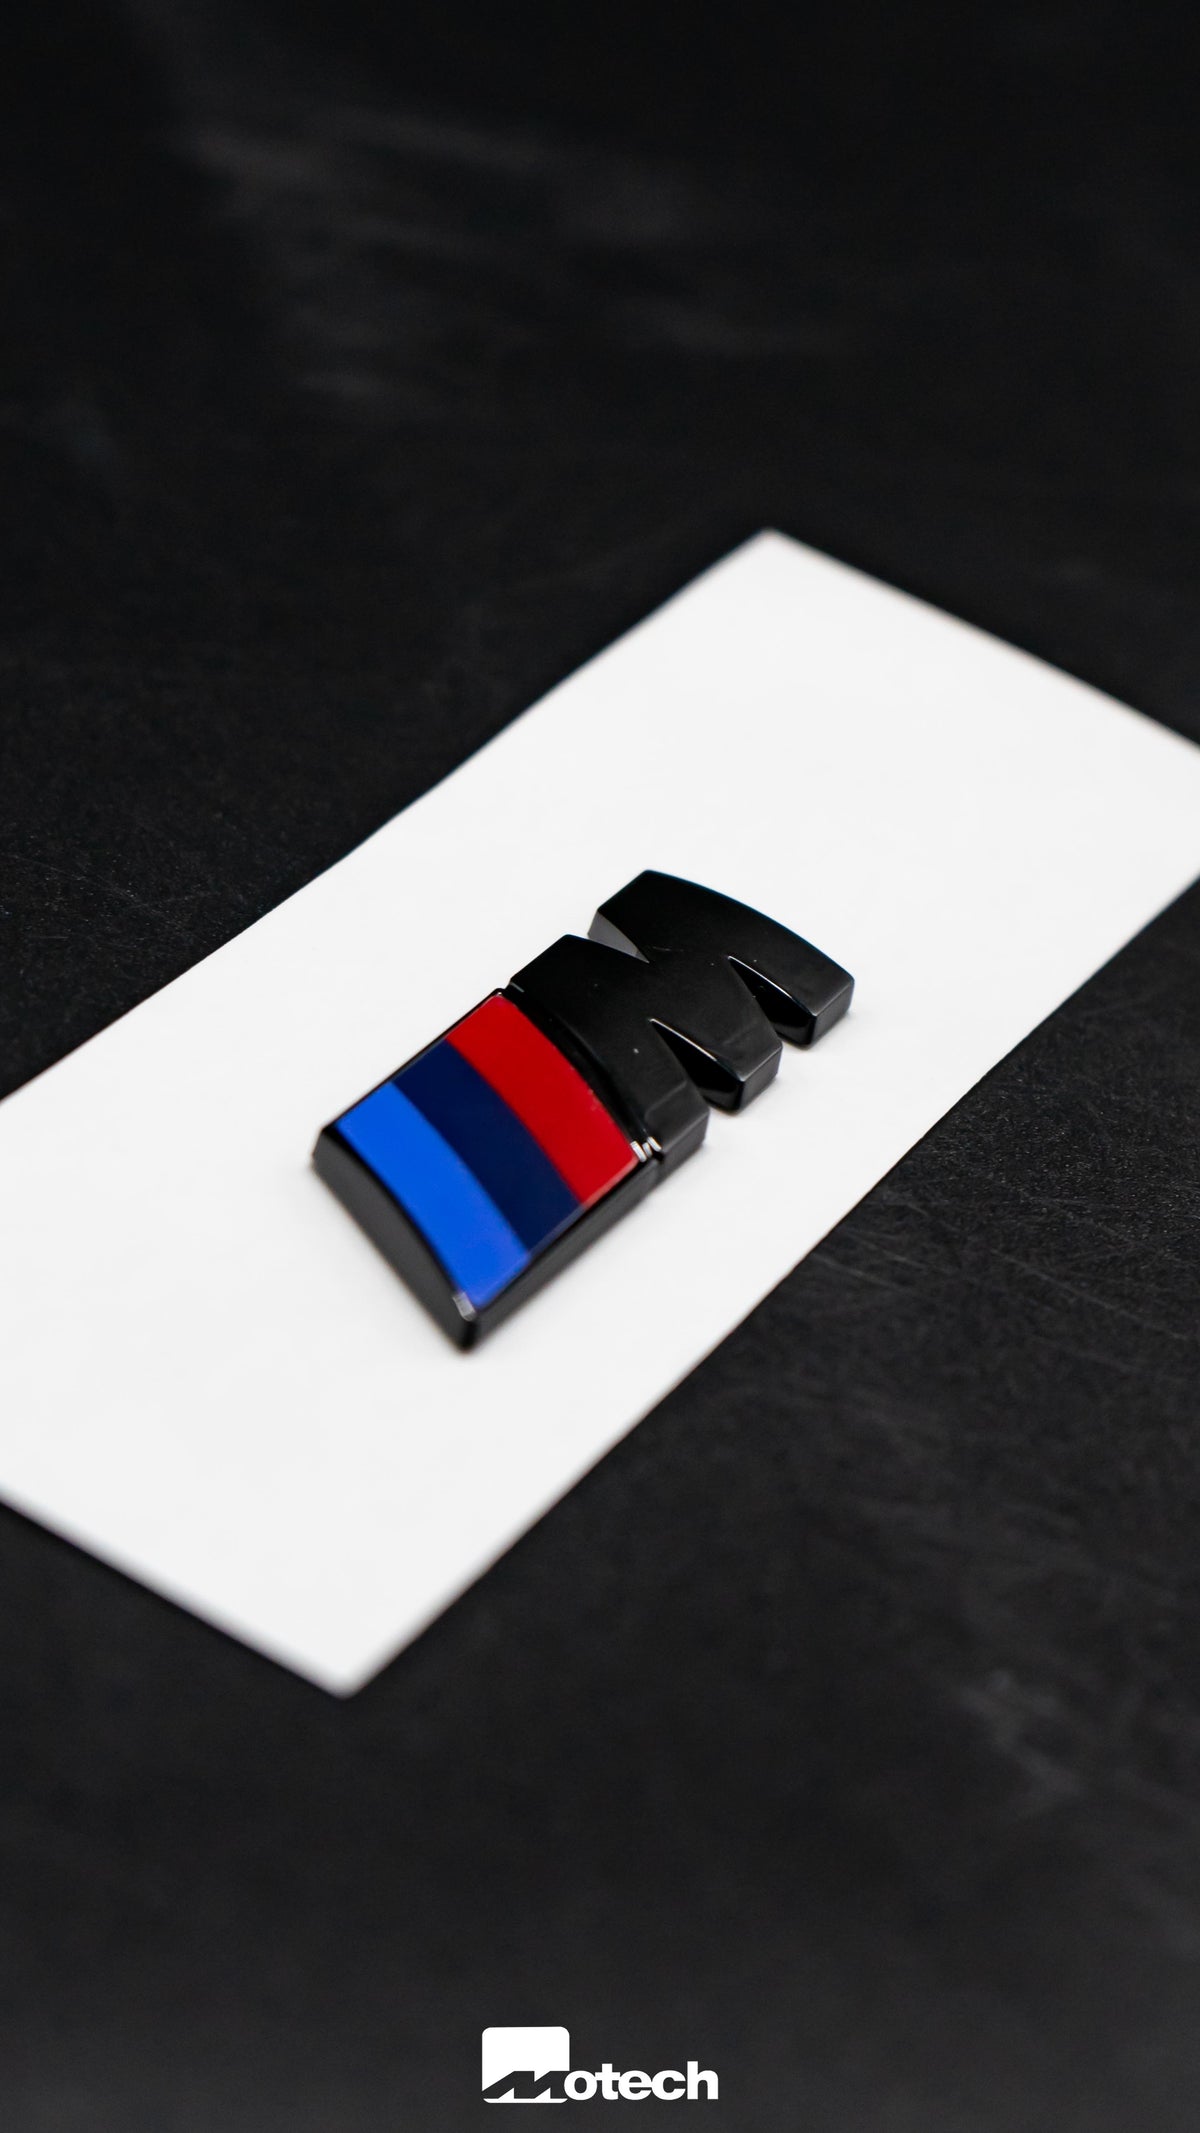 BMW Genuine Gloss Black M Badges